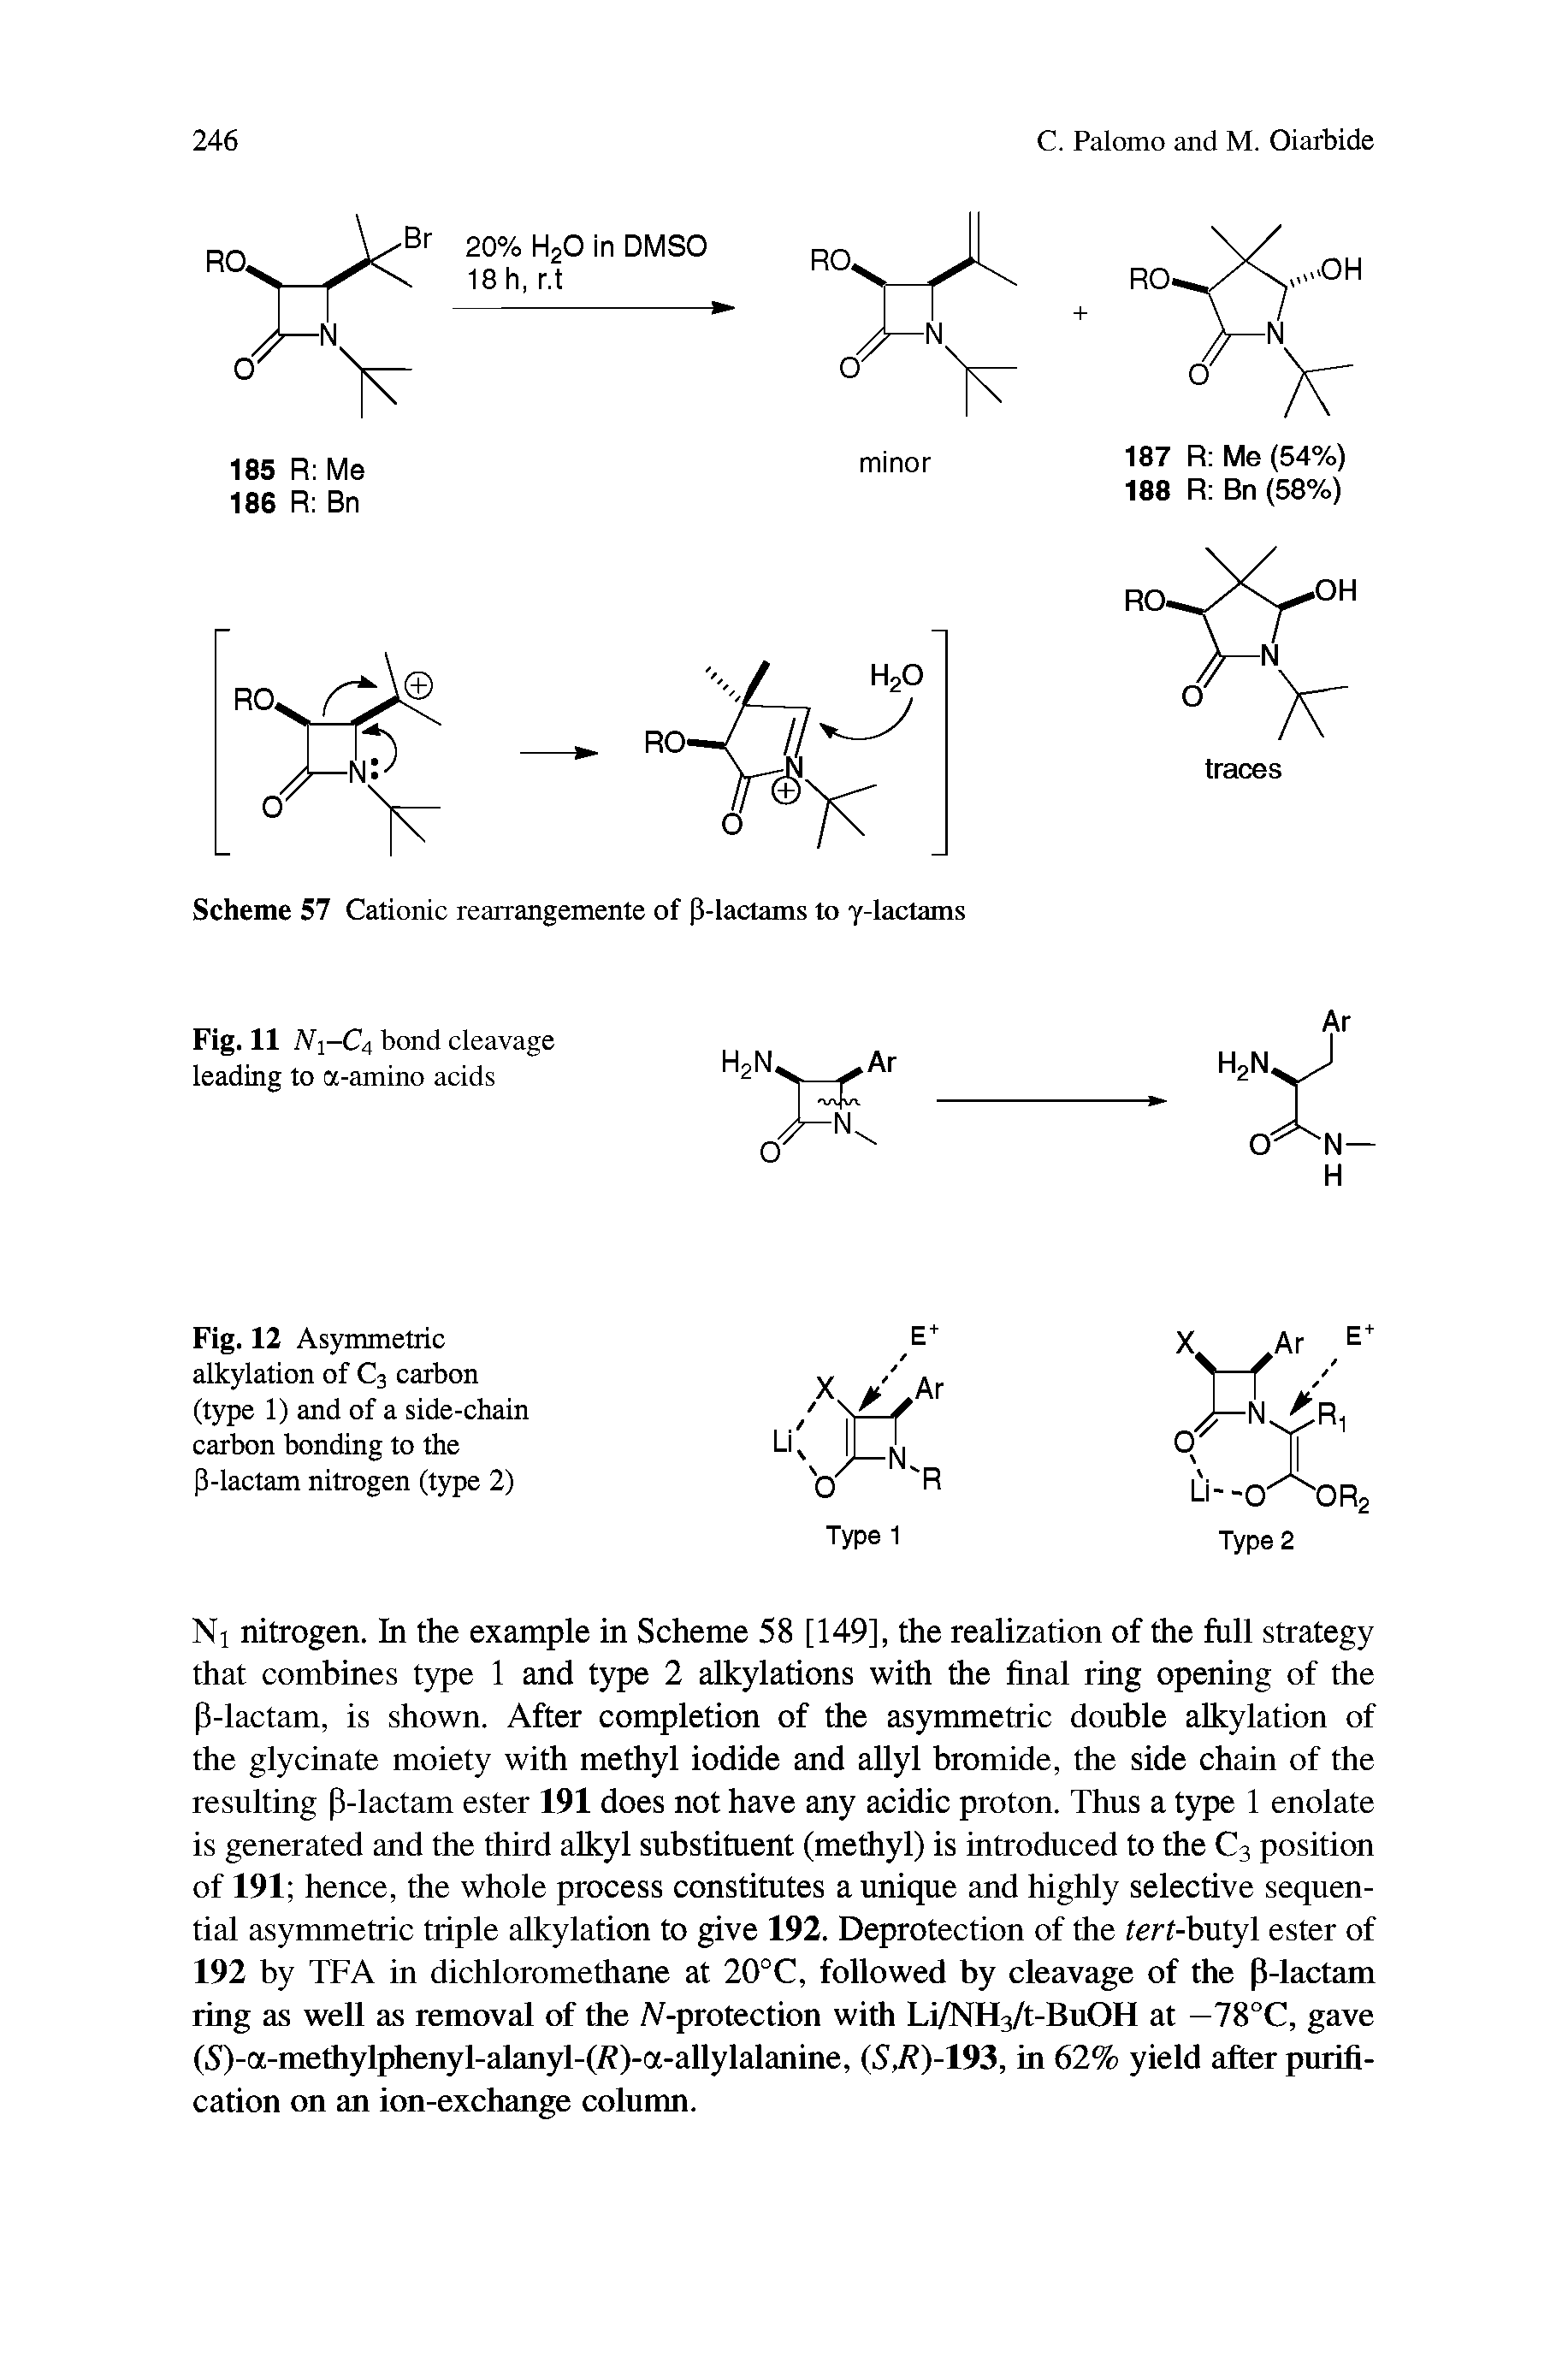 Fig. 12 Asymmetric alkylation of C3 carbon (type 1) and of a side-chain carbon bonding to the P-lactam nitrogen (type 2) E+ X Ar Ui ft V R X Ar E Li -crxiR ...